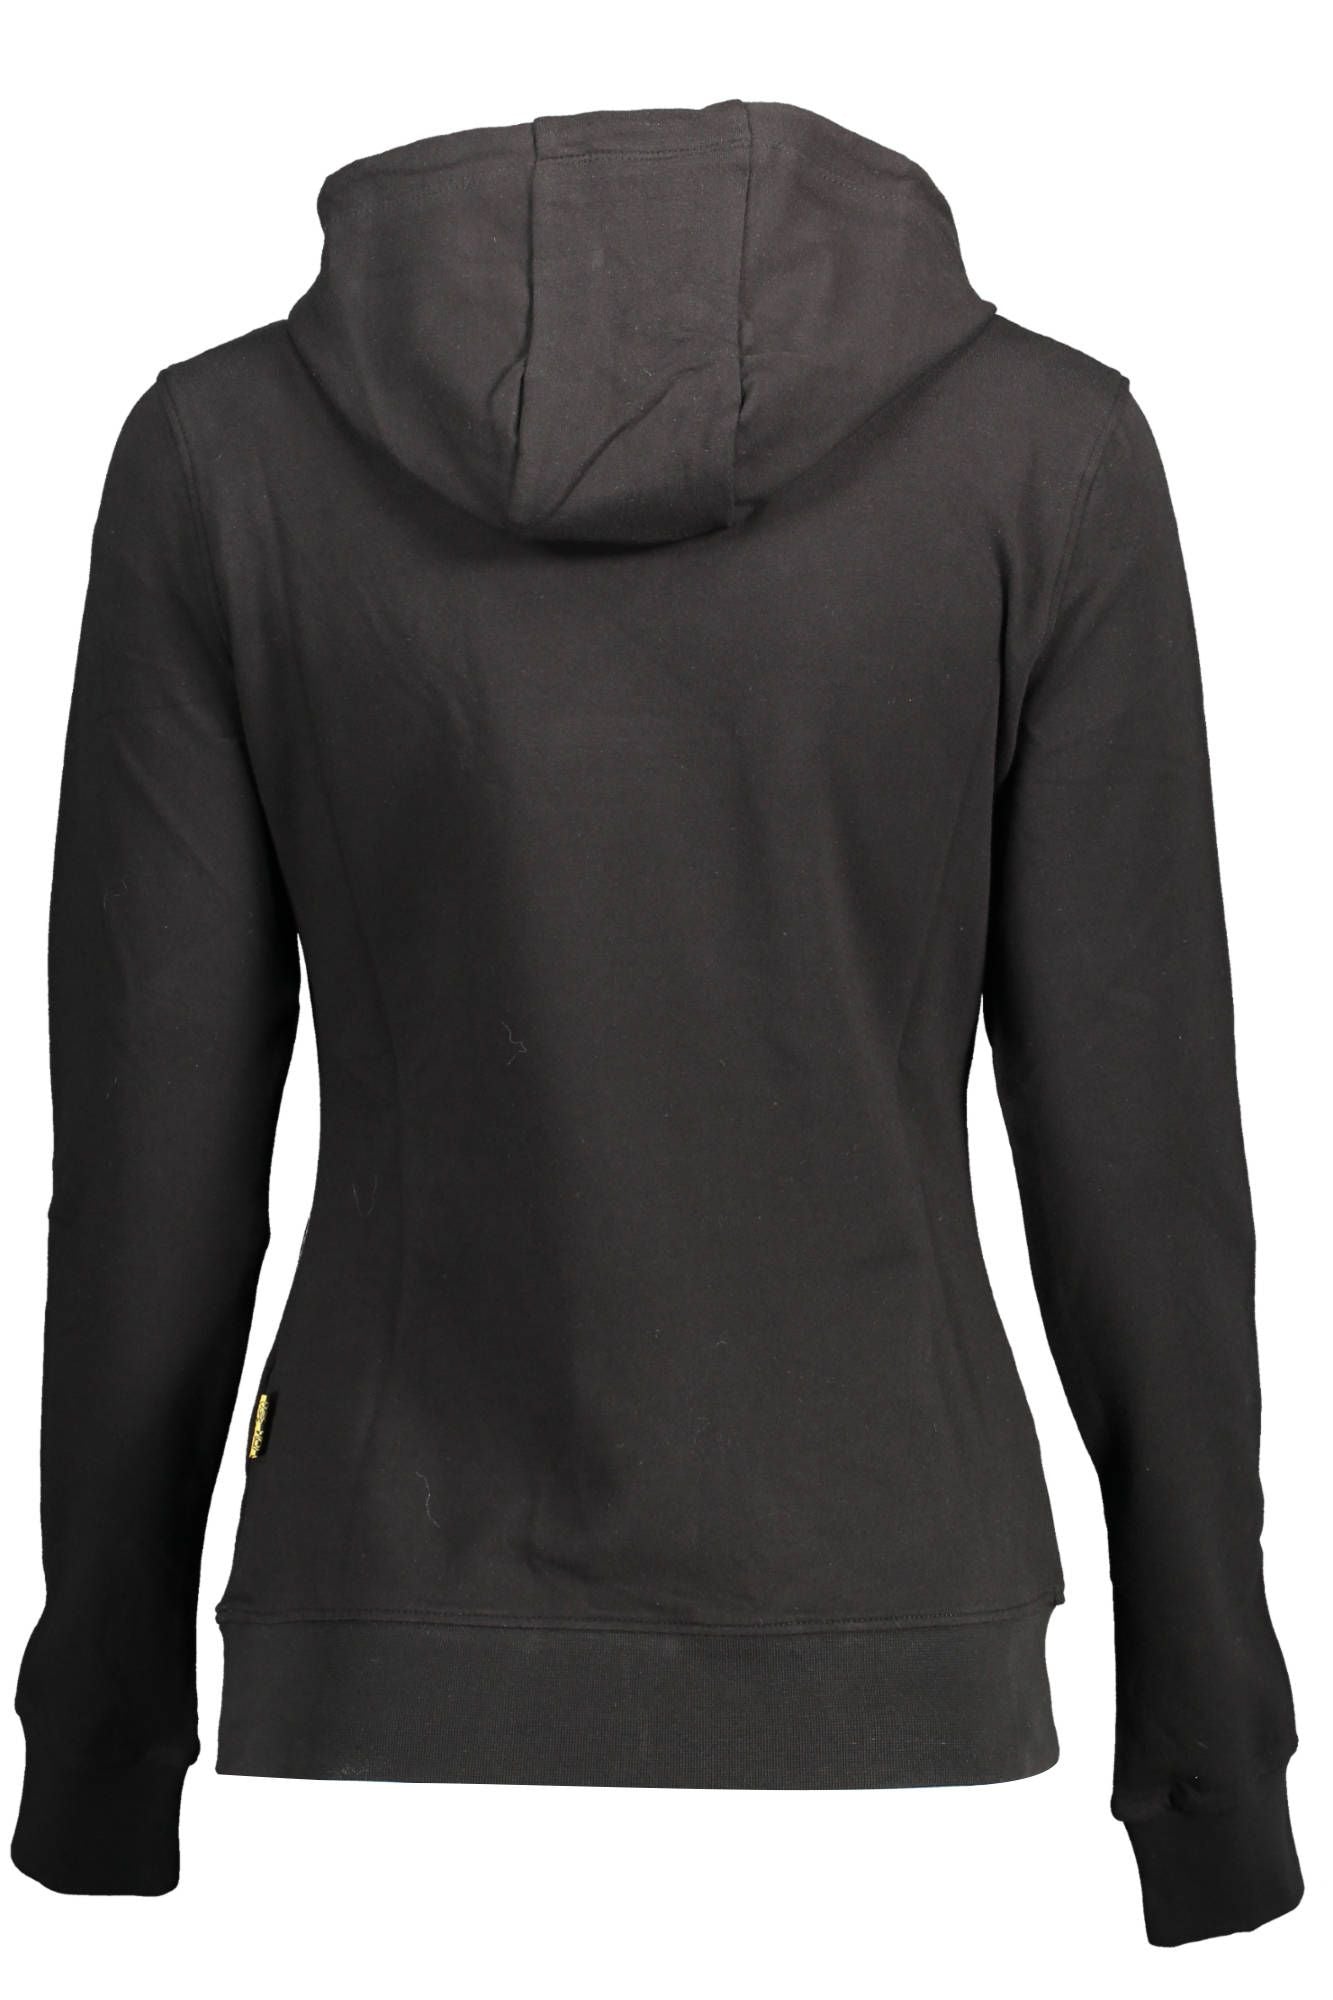 Sleek Black Hooded Sweatshirt with Bold Accents